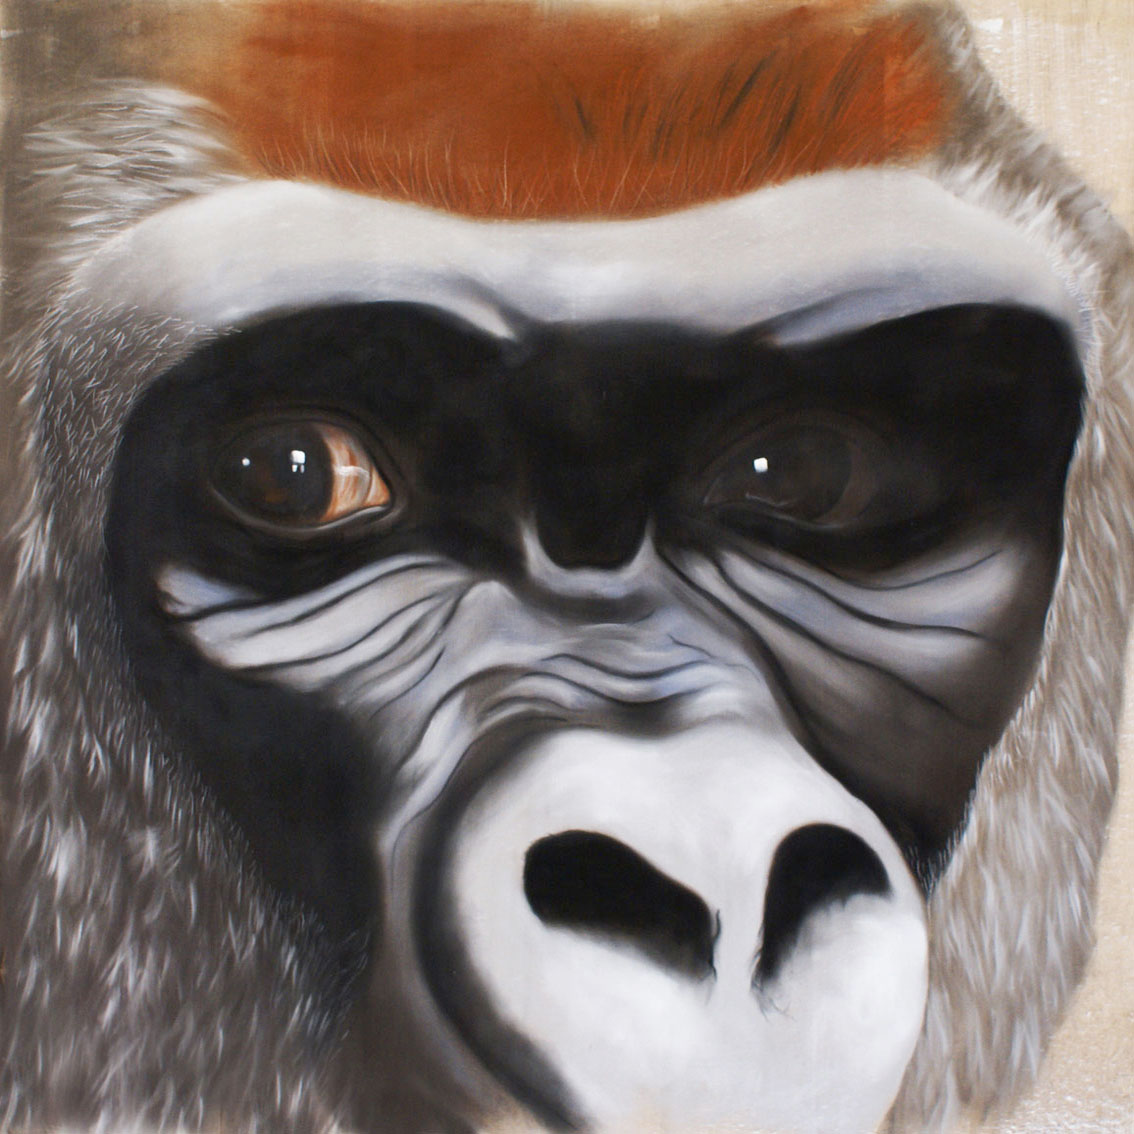 SILVERBACK singe Thierry Bisch artiste peintre contemporain animaux tableau art décoration biodiversité conservation 